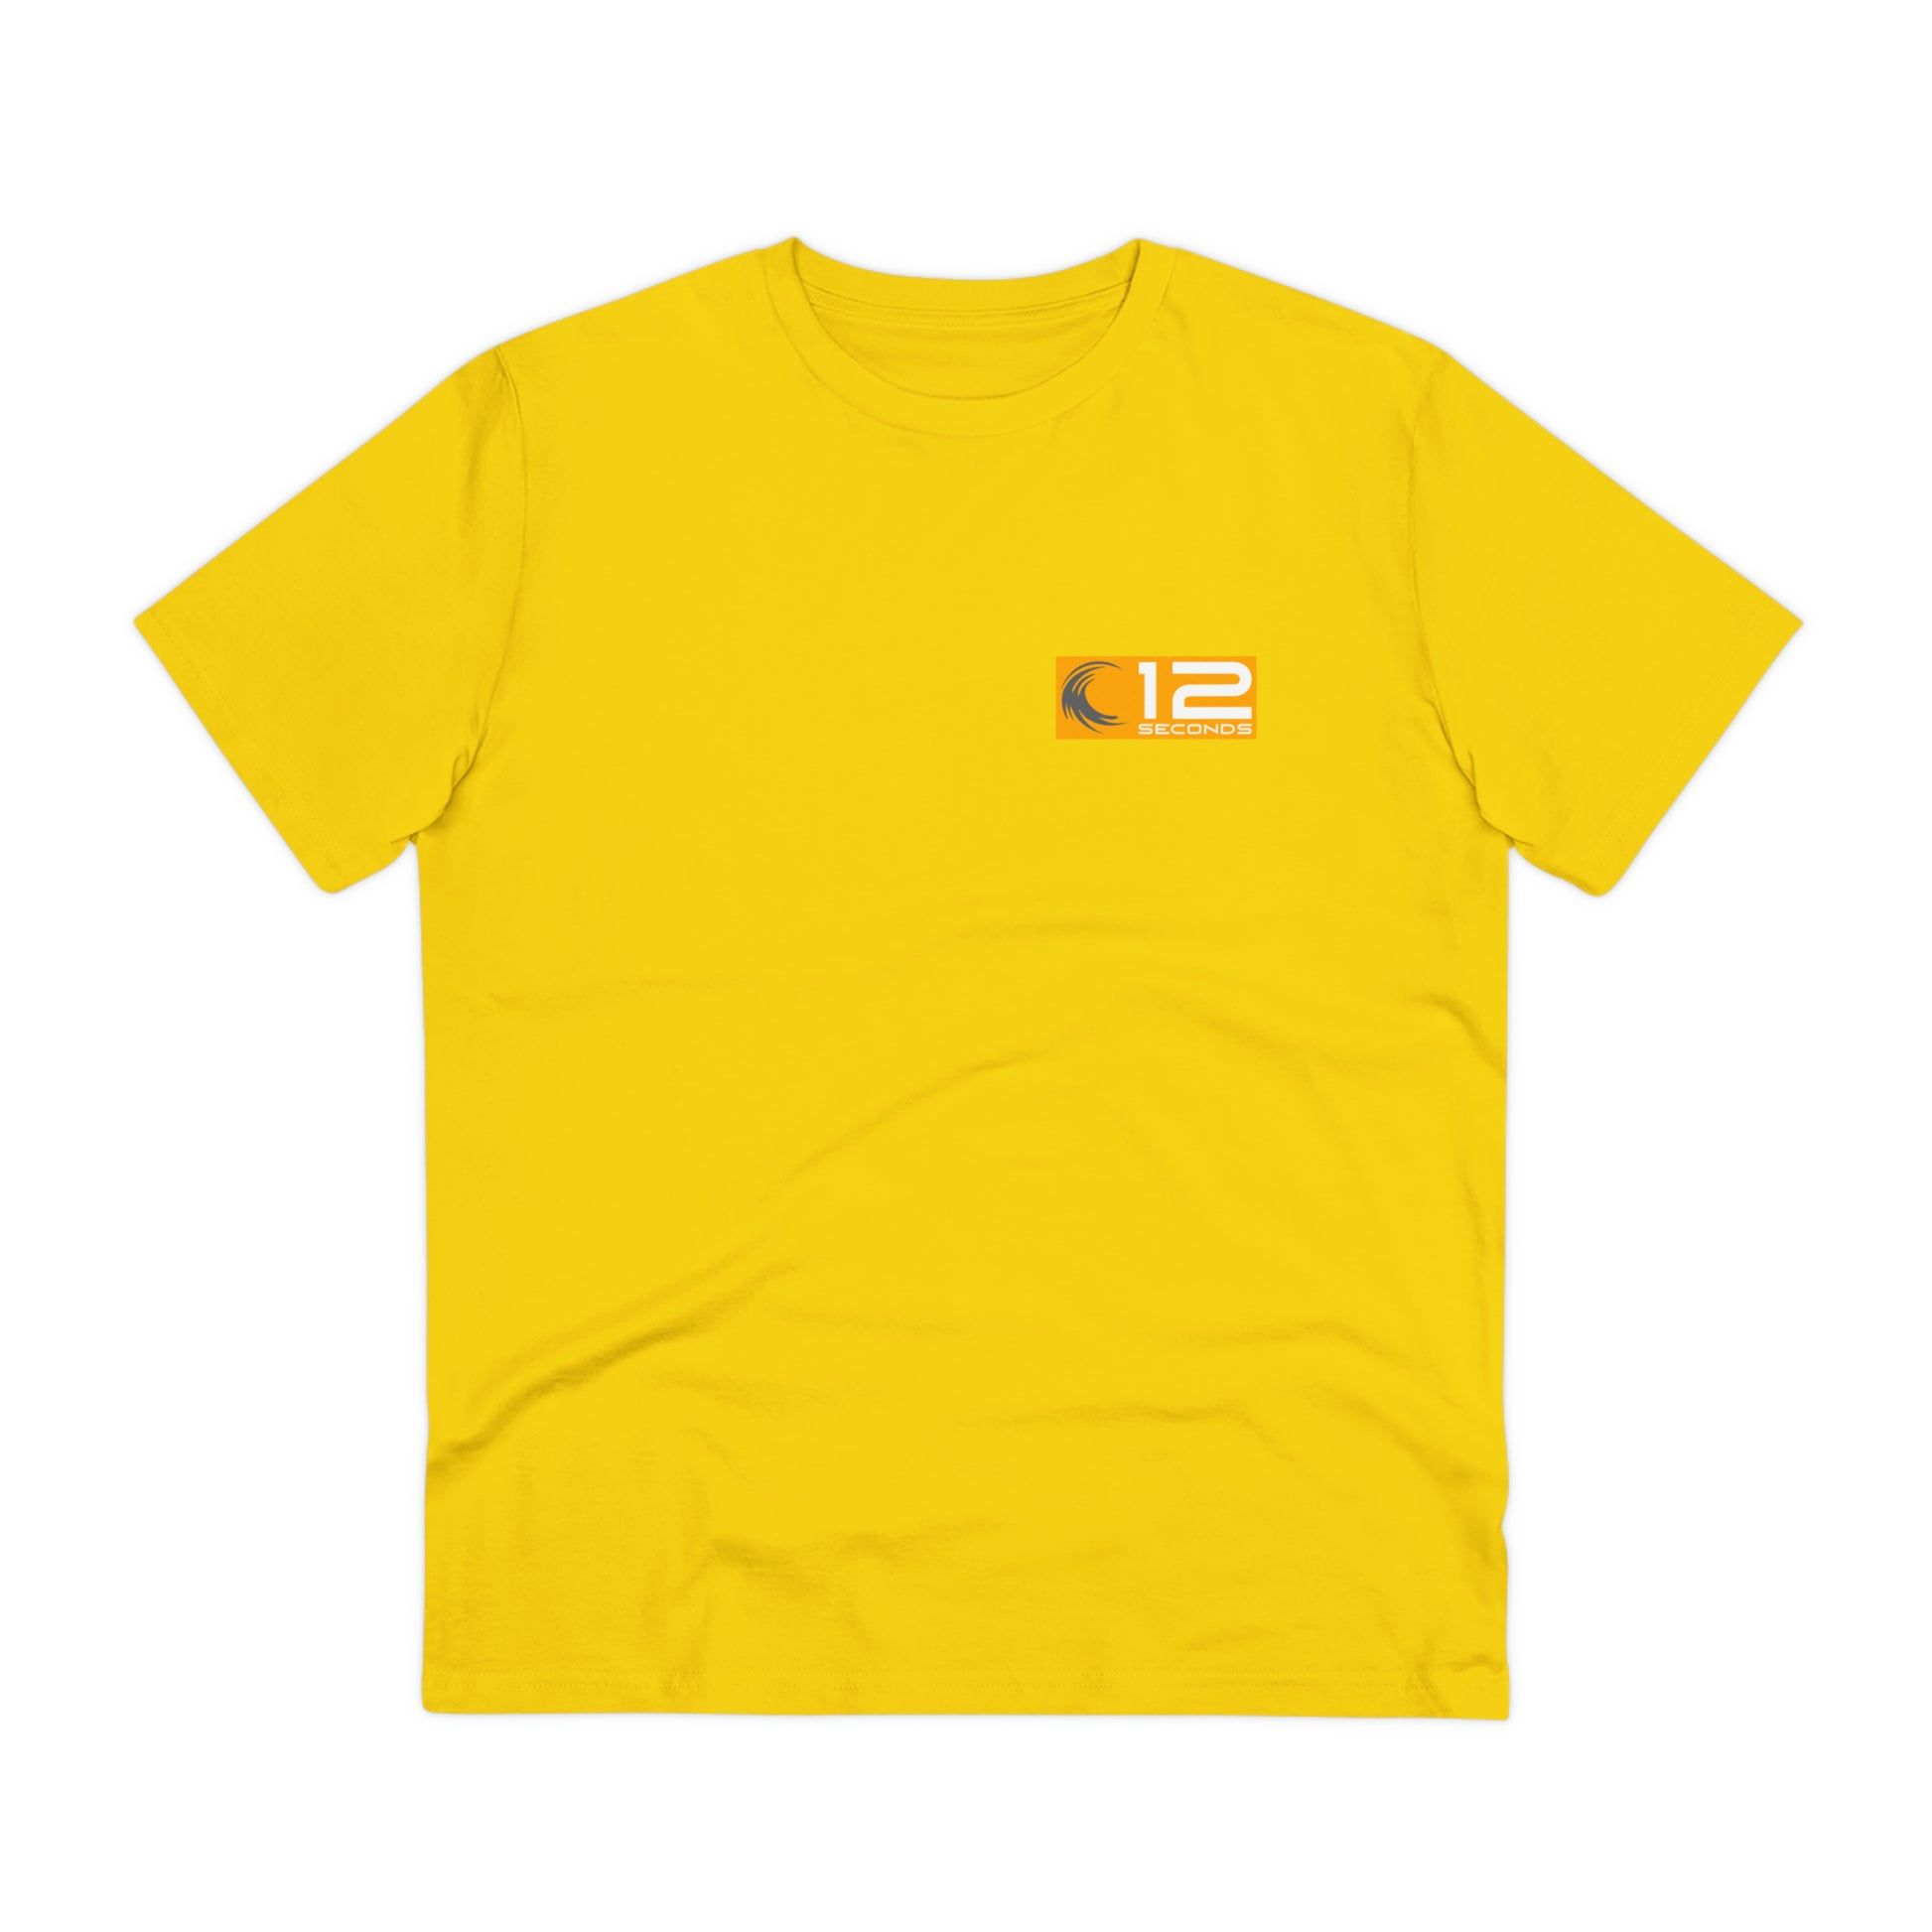 Organic Creator T-shirt - Unisex - SUNSET - 12 SECONDS APPAREL